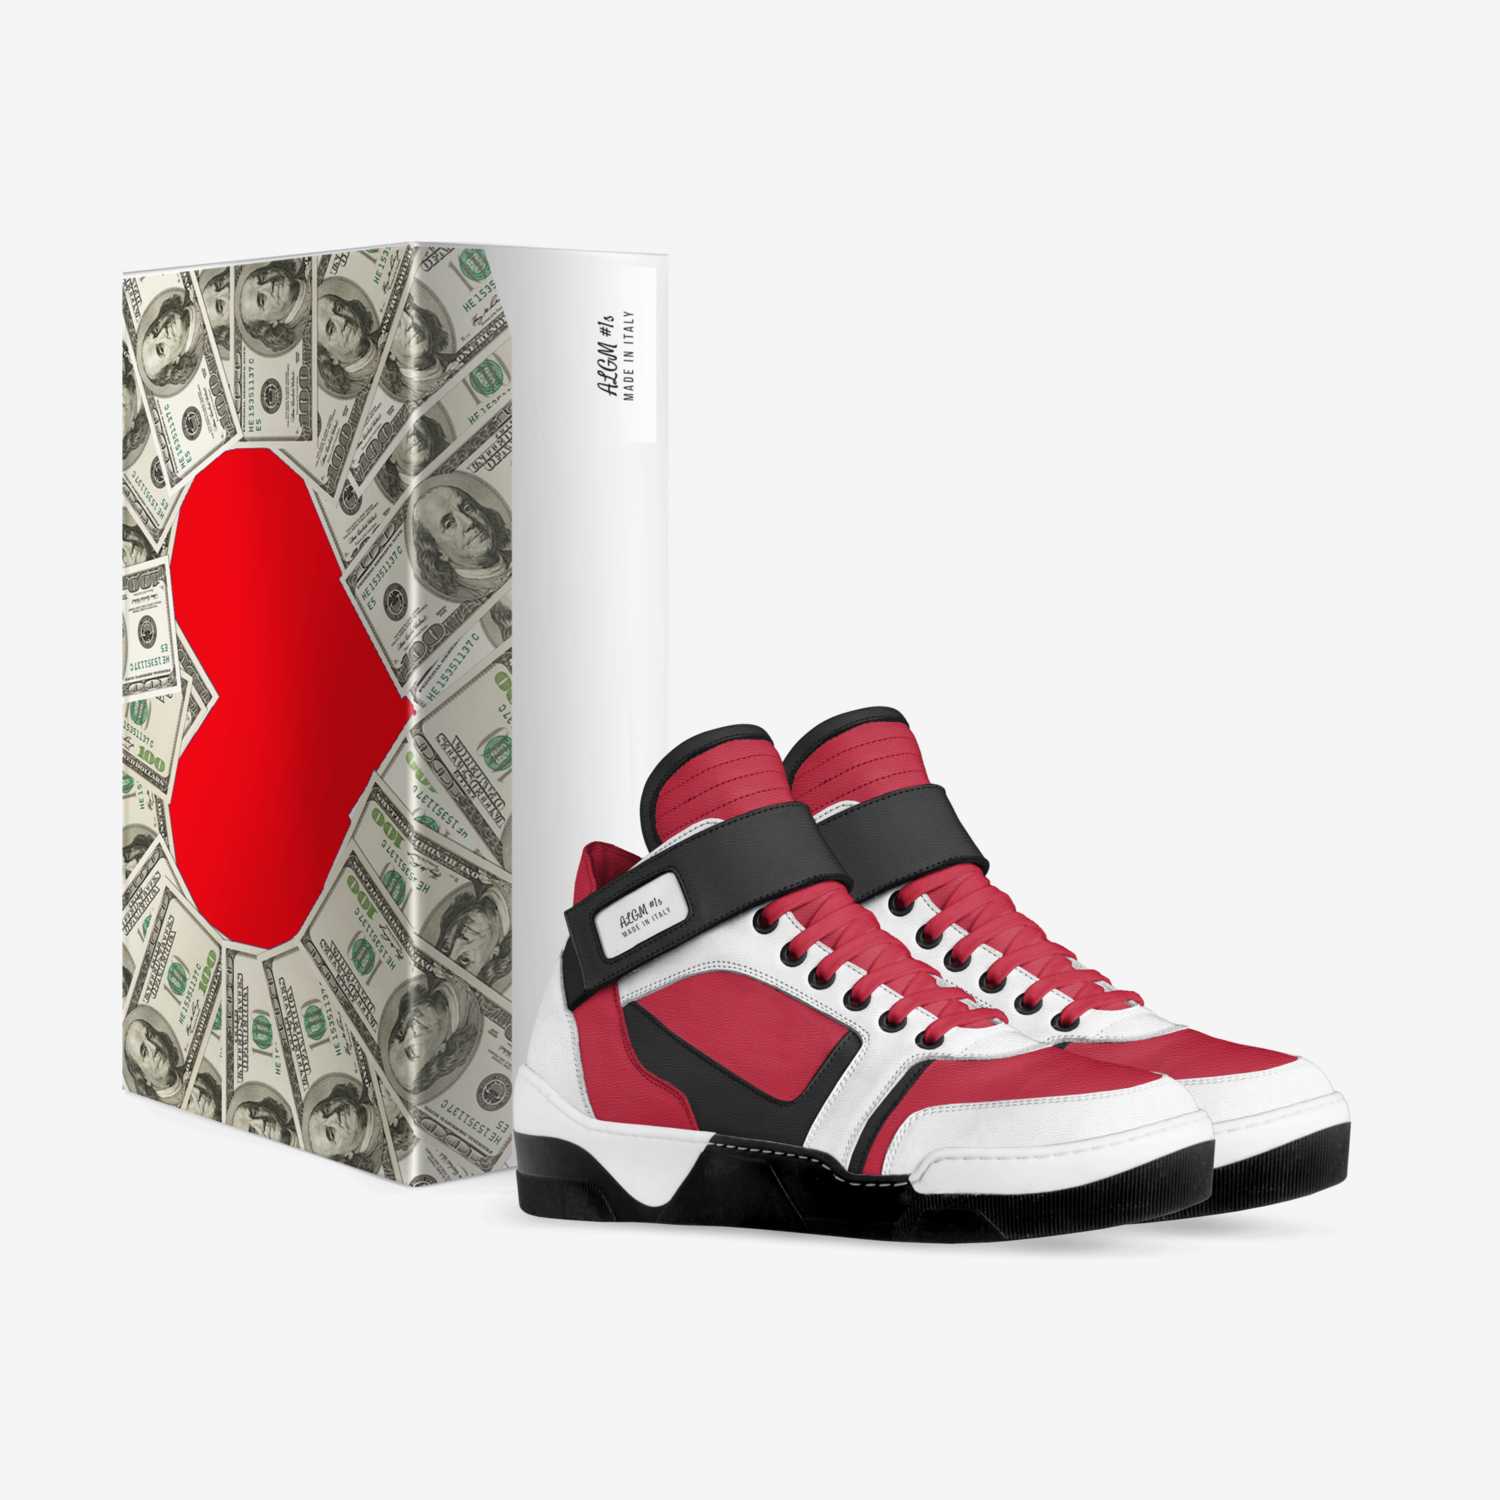 ALGM #1s custom made in Italy shoes by Ebony Thomas | Box view